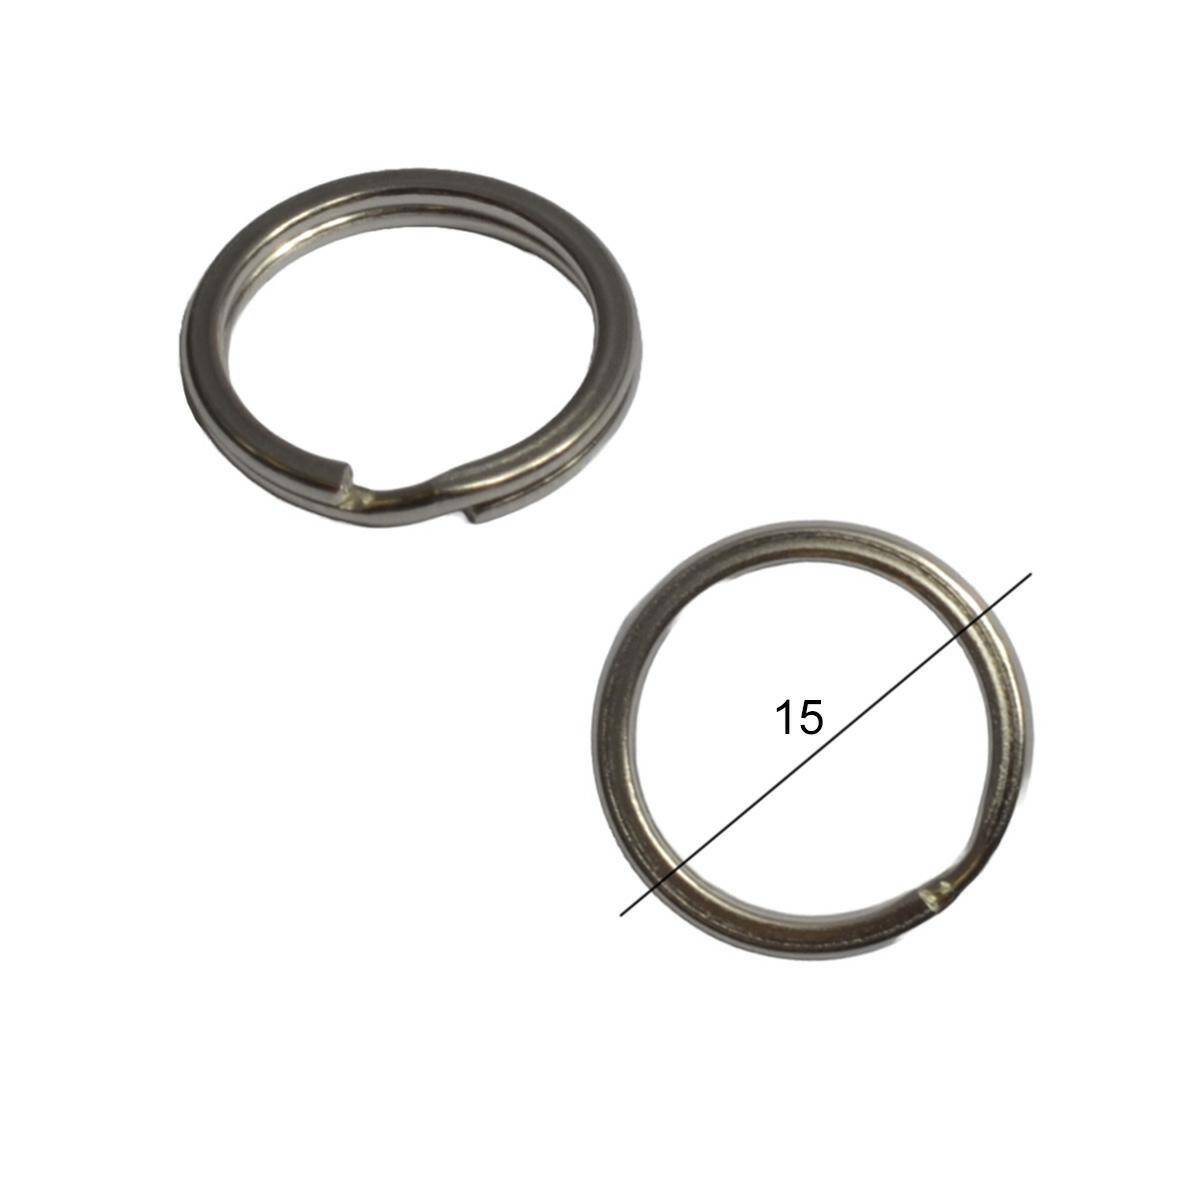 Key rings - flat - 15 mm